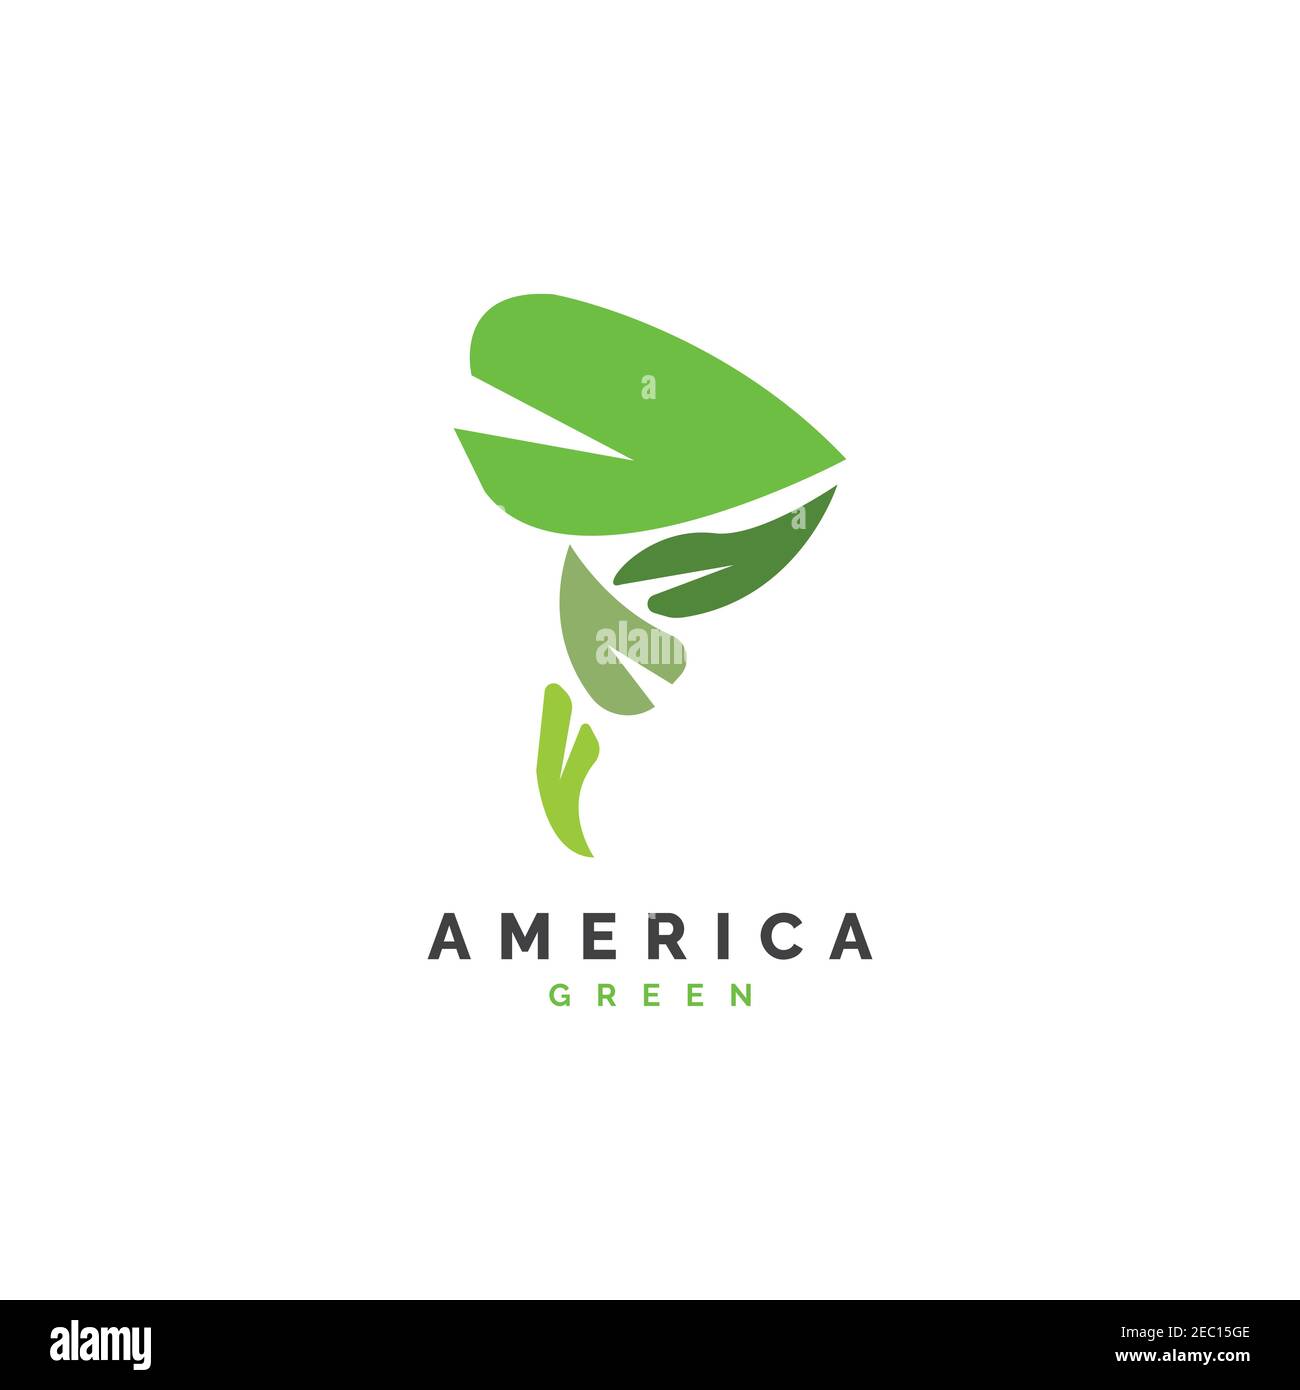 America map with leaf symbol logo design illustration vector template Stock Vector